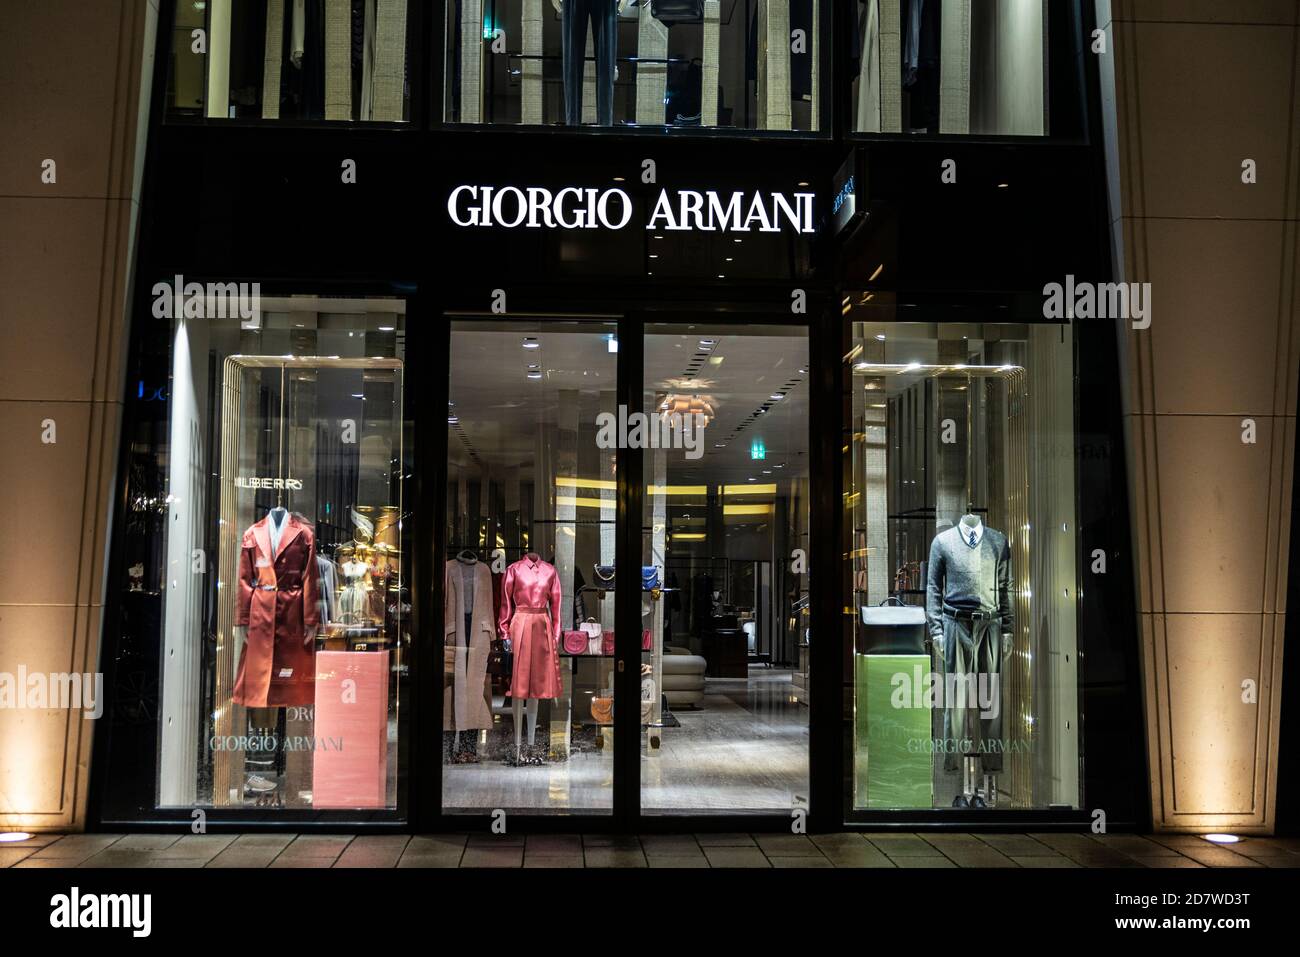 Giorgio armani shop sign hi-res stock photography - Alamy